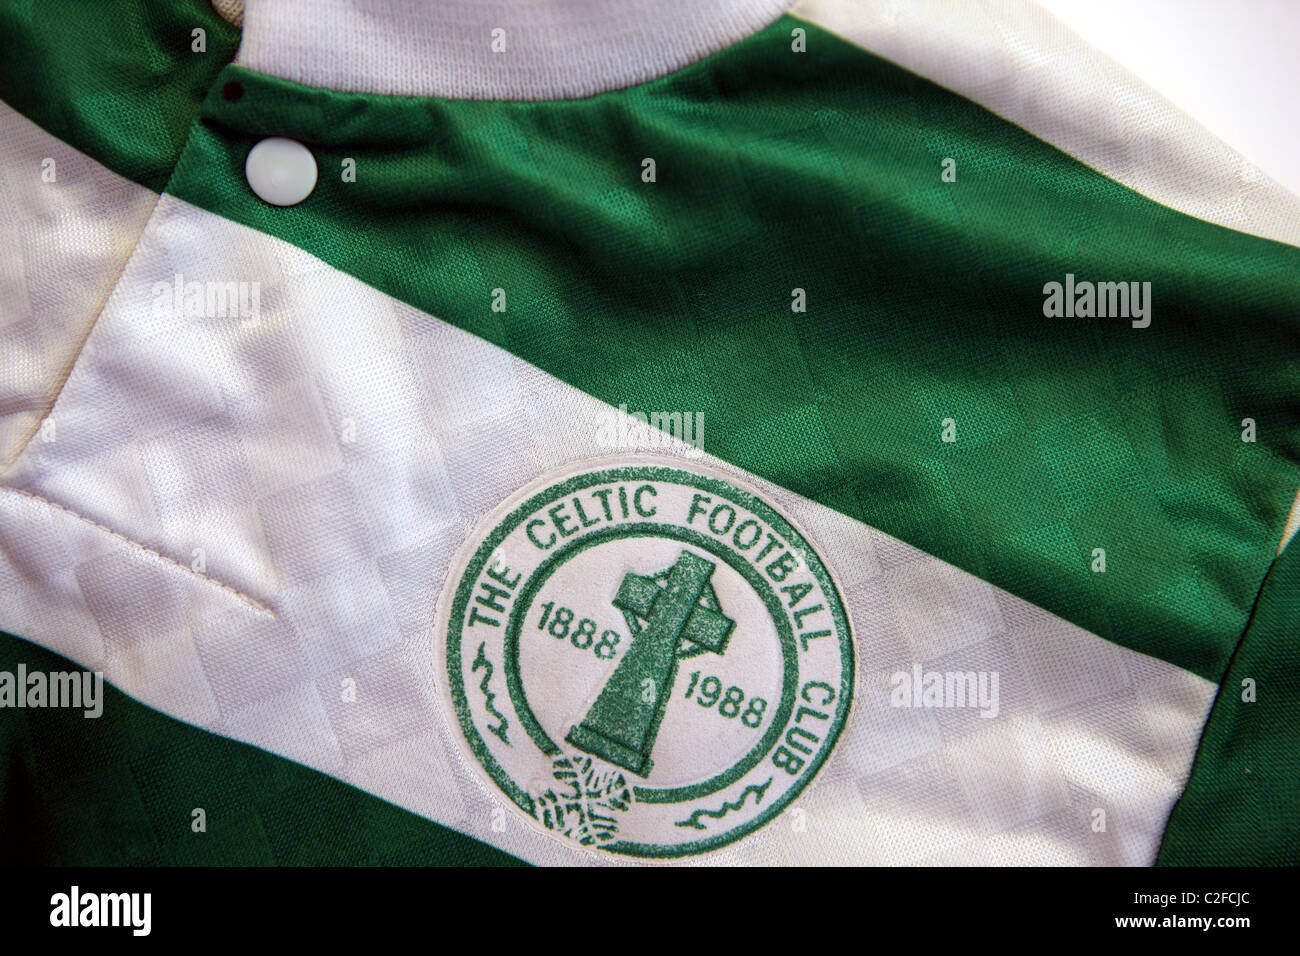 1980 S Celtic Football Club Strip Stock Photo 35989252 Alamy